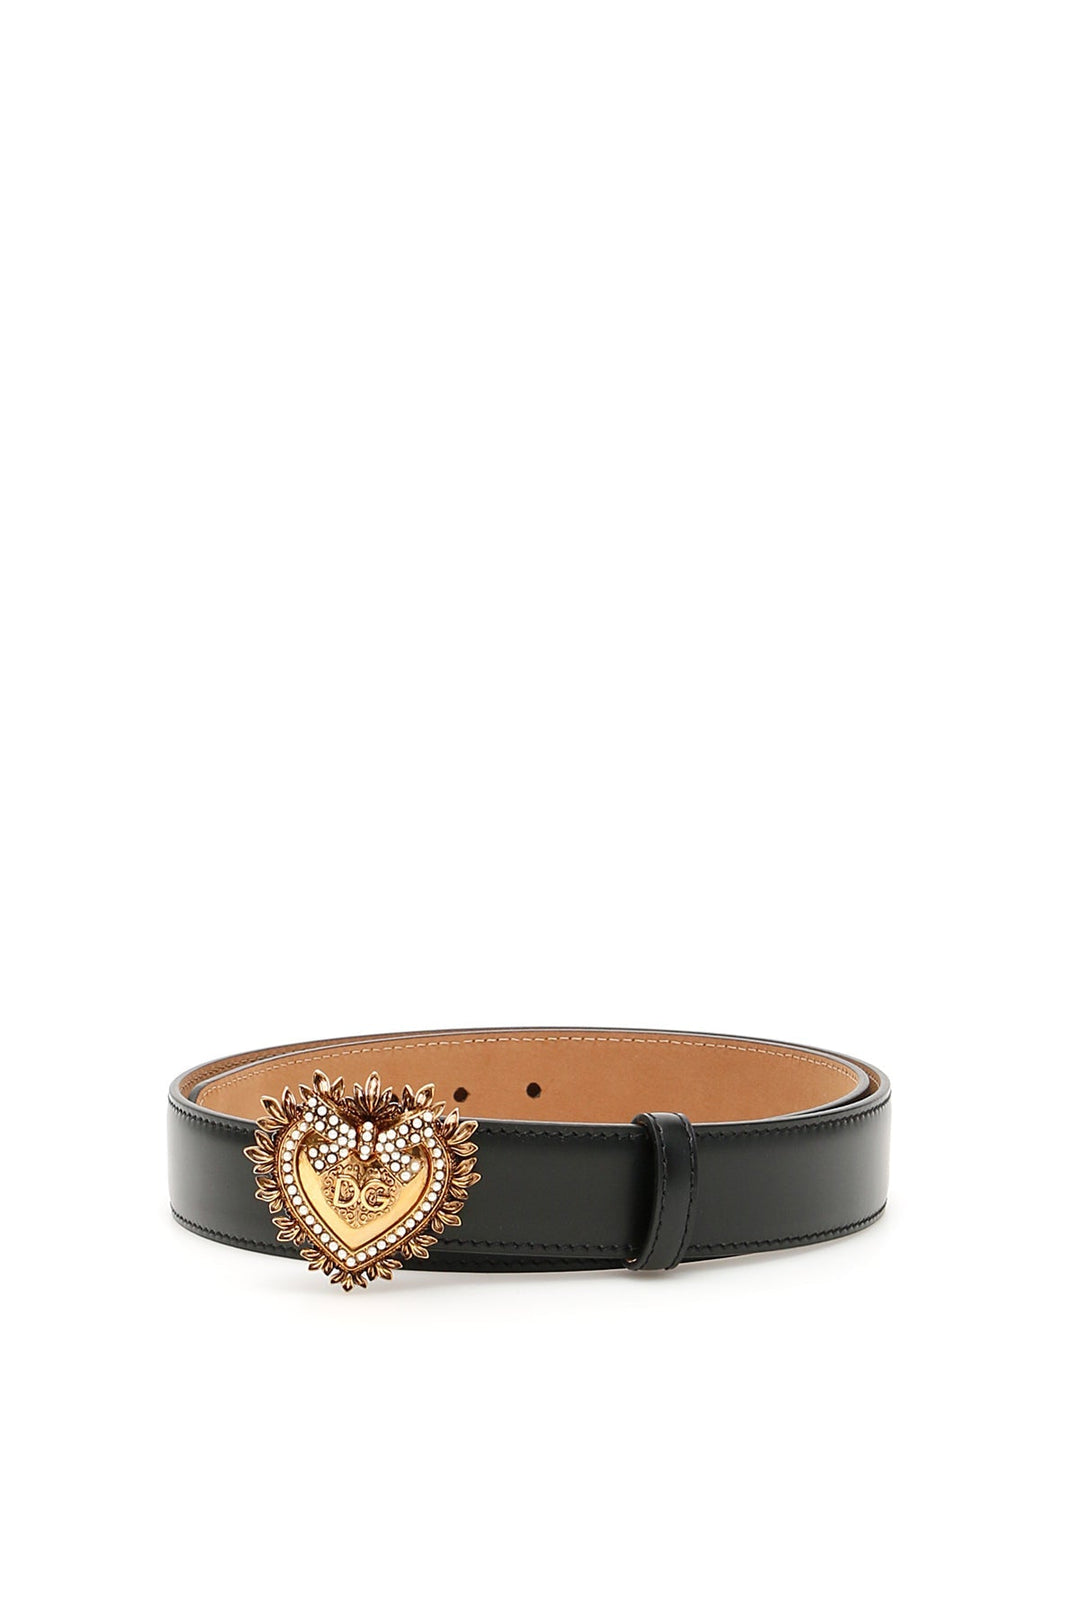 Accessories - Belts - Dolce & Gabbana Devotion Leather Belt (Size - 85) - 232450ACR000008-80999-85 - Ask Me Wear